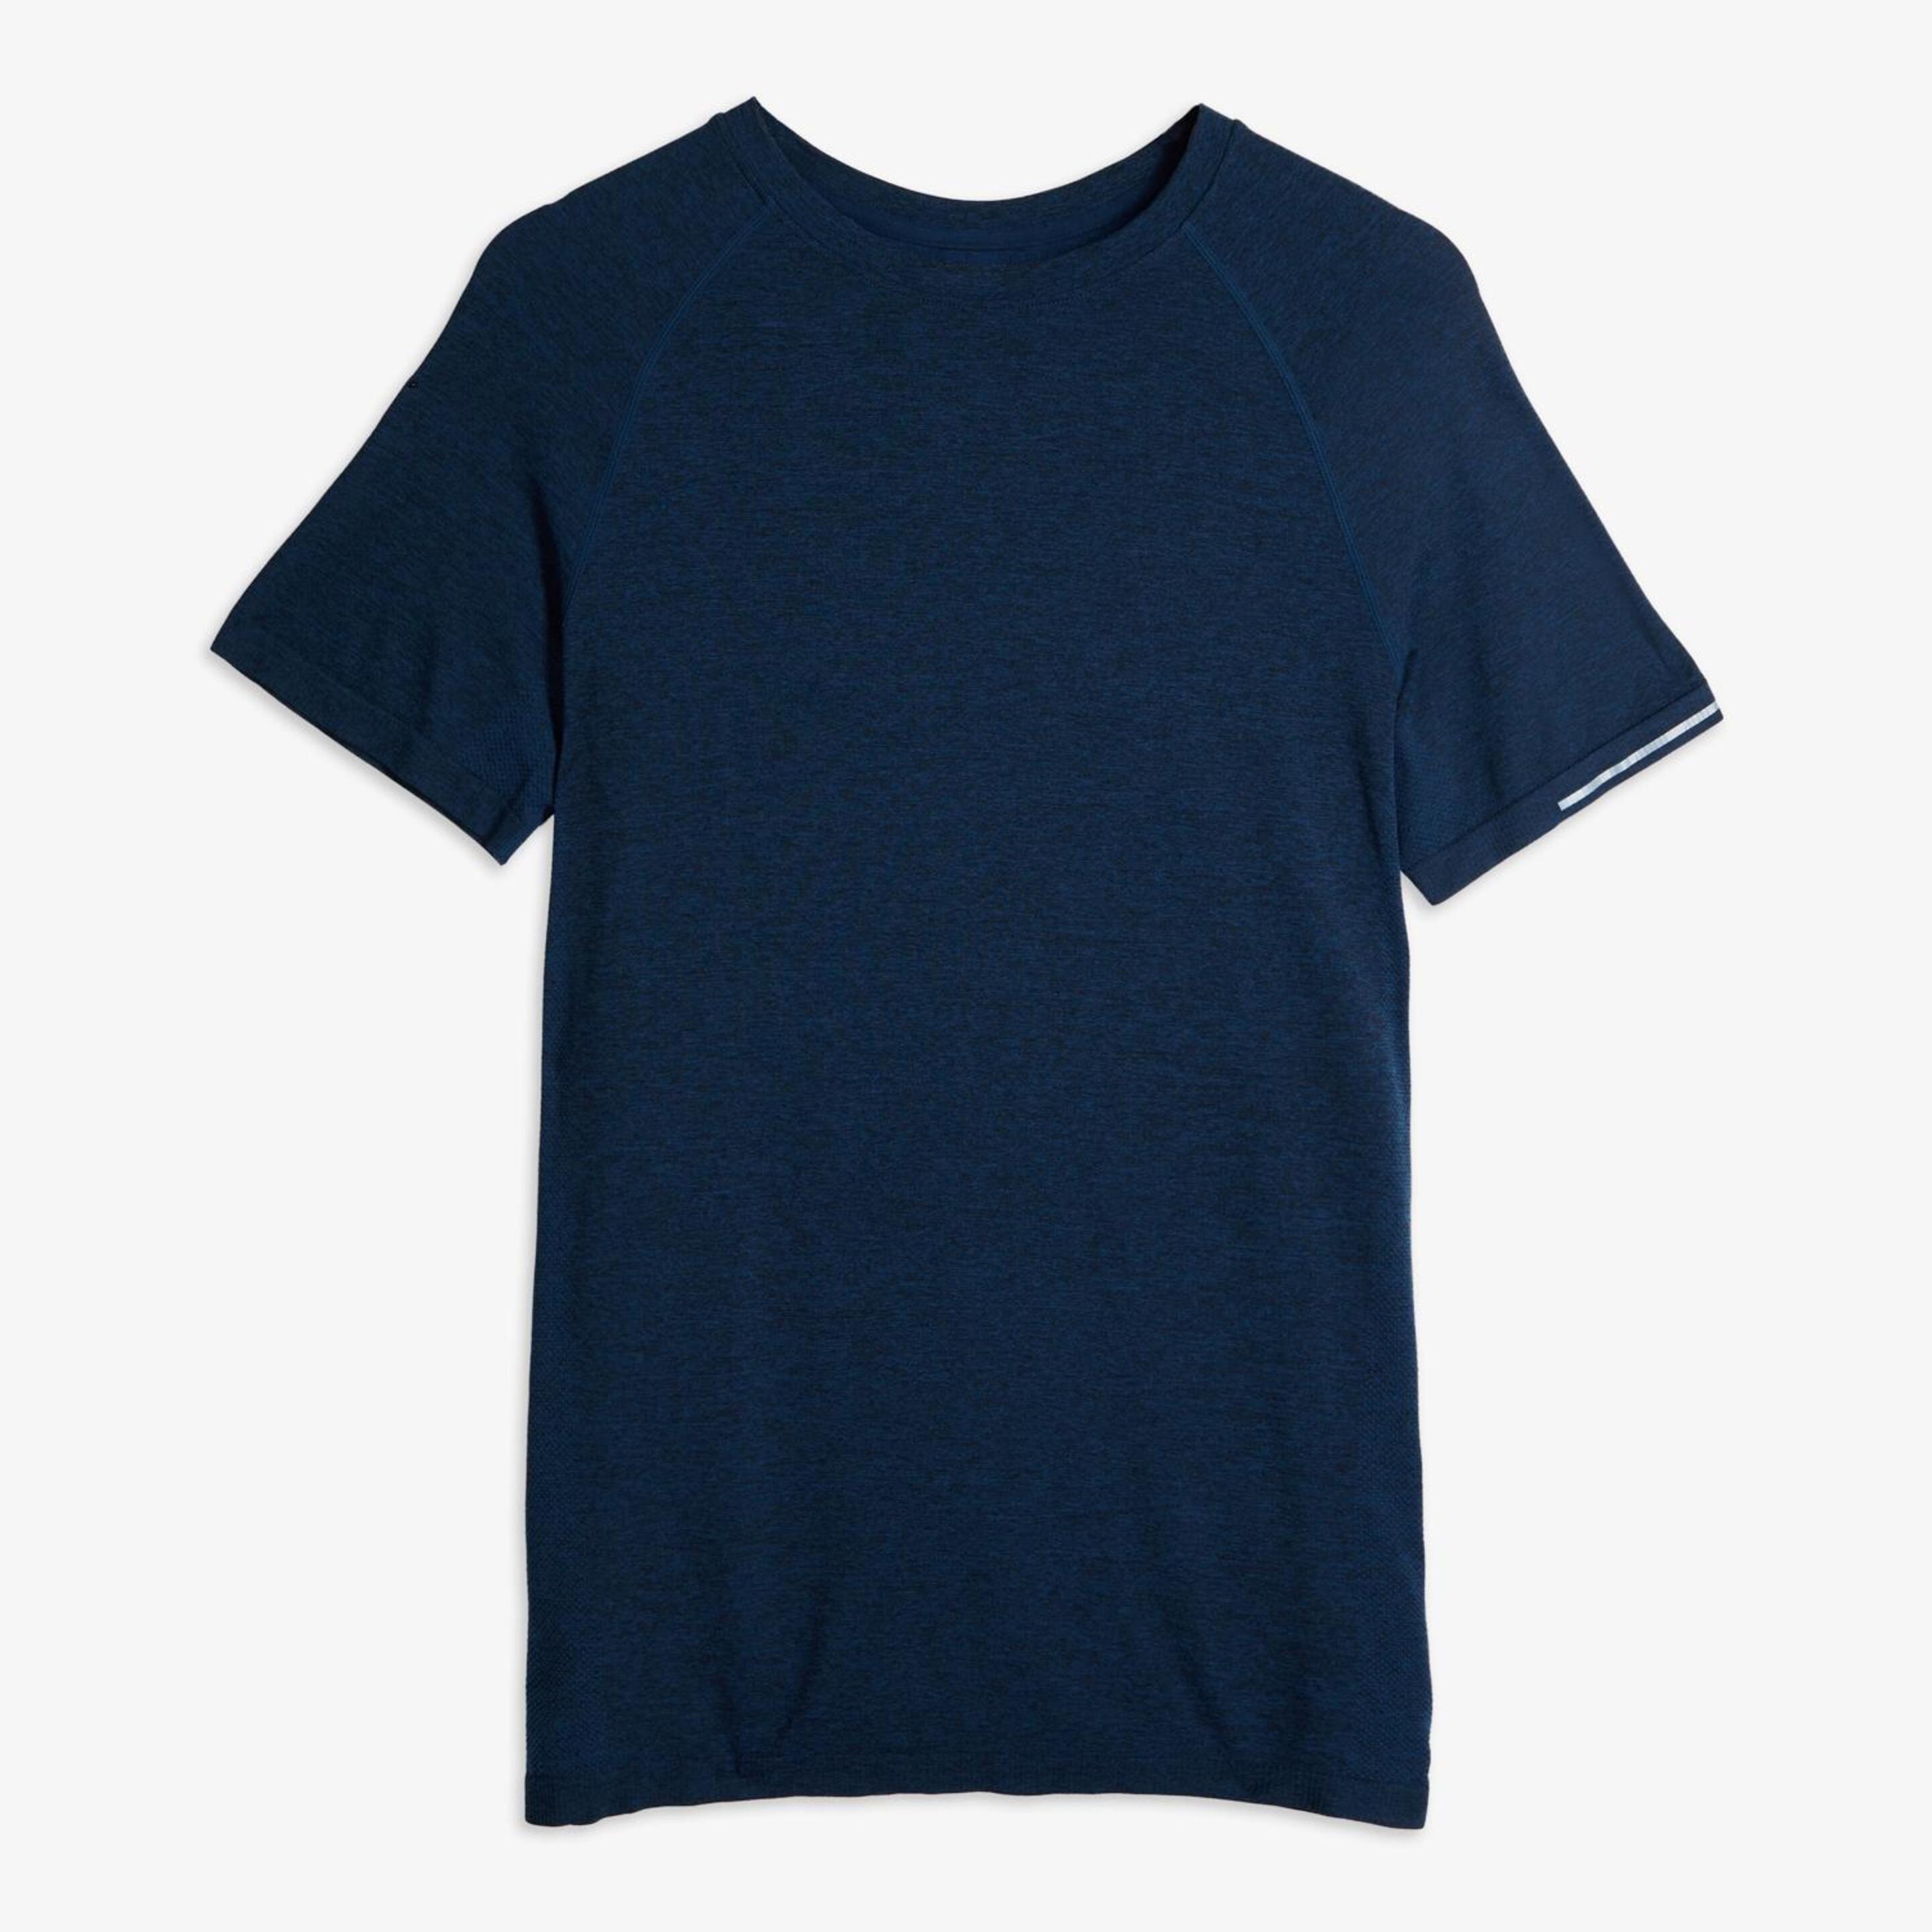 Doone Activ  - Marino - Camiseta Sin Costuras Hombre